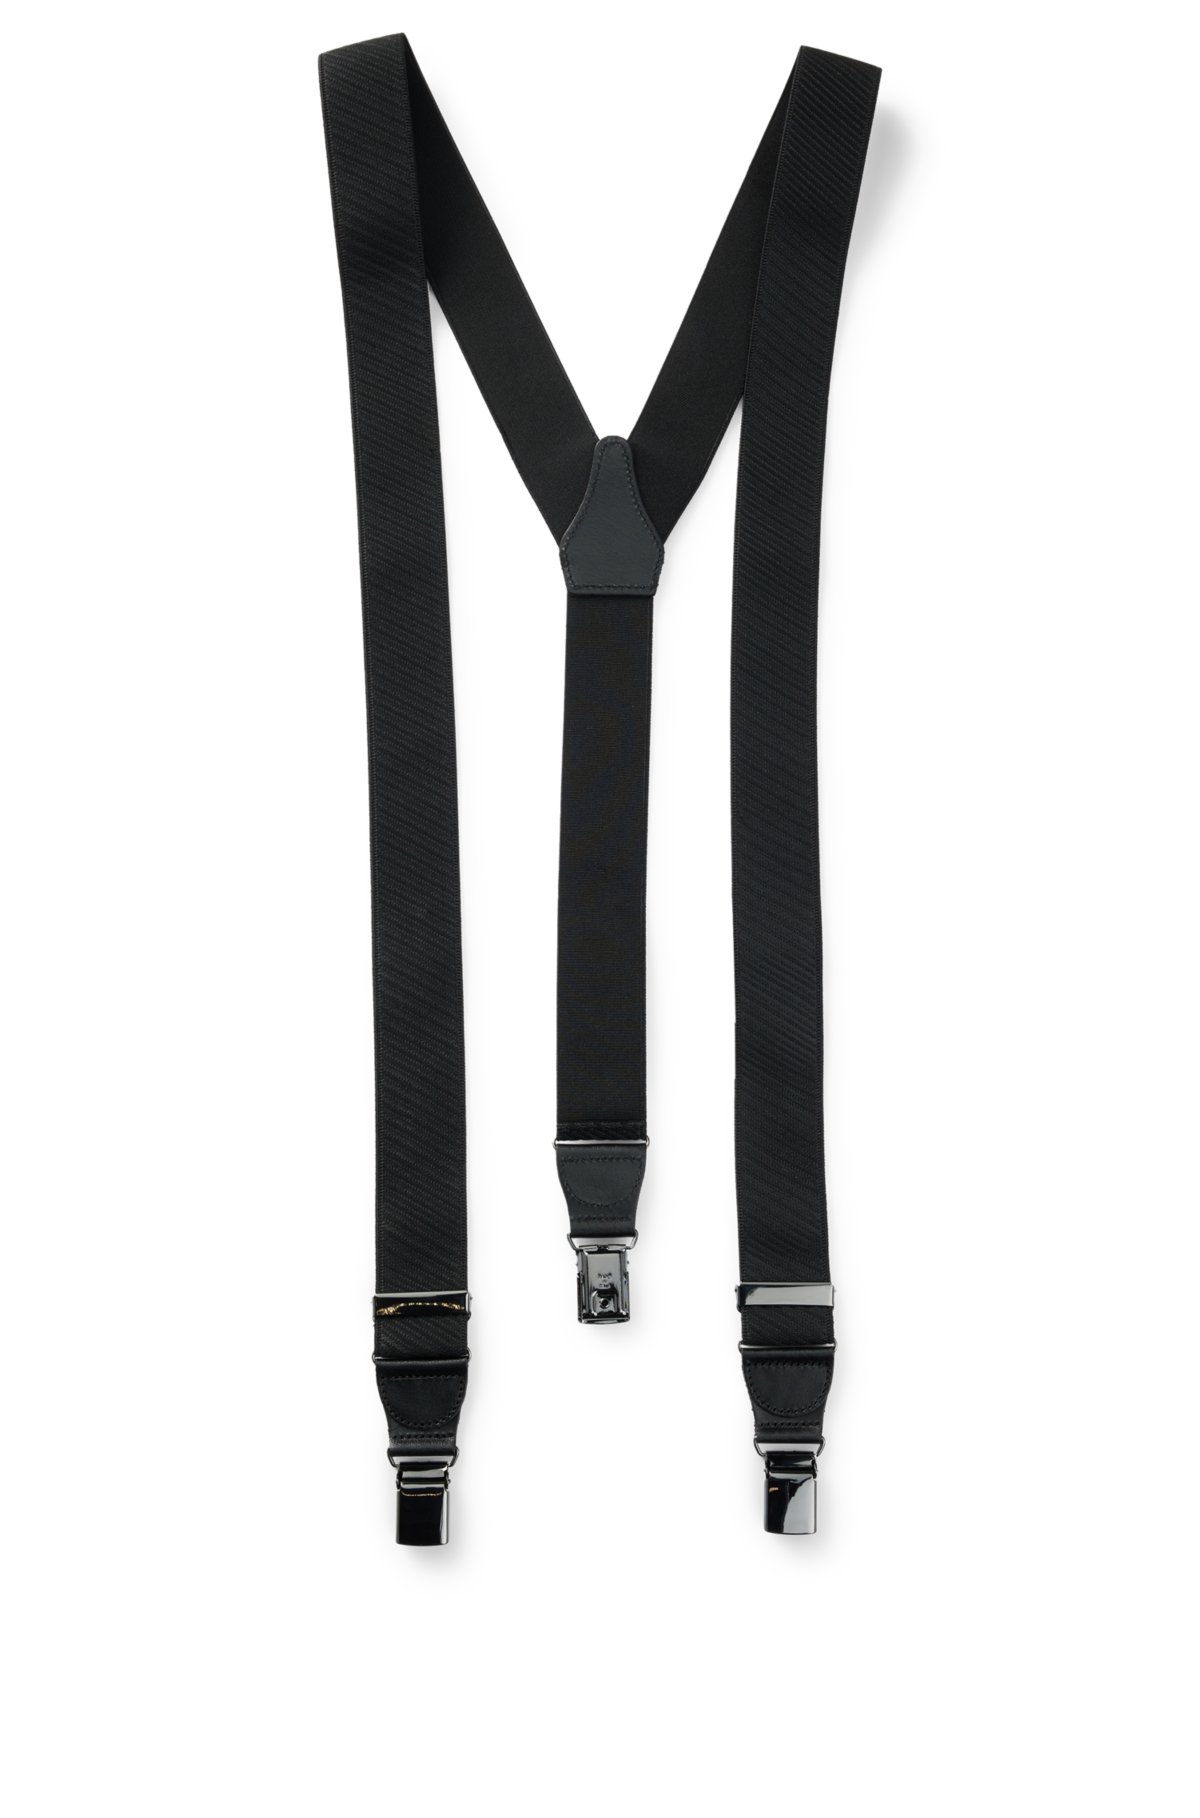 Suspenders / Braces - Black Moiré - with Leather Trimmings - Mond